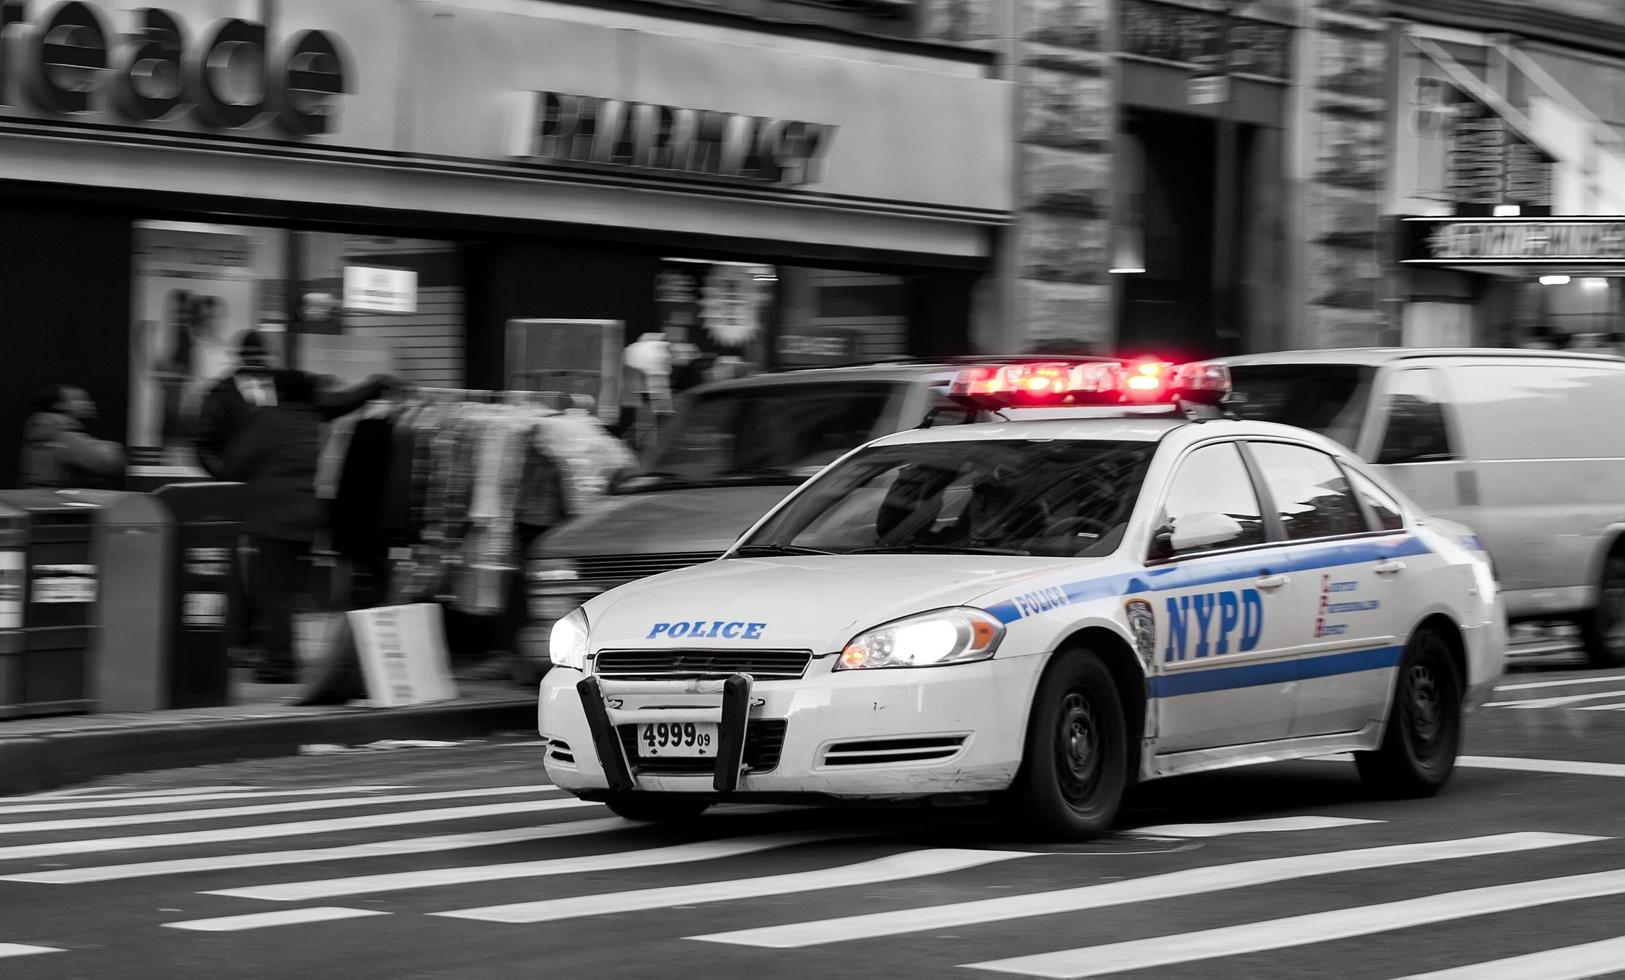 Neu York, USA - - Dezember 9, 2011 - - Neu York nypd Polizei Auto im das Straße foto